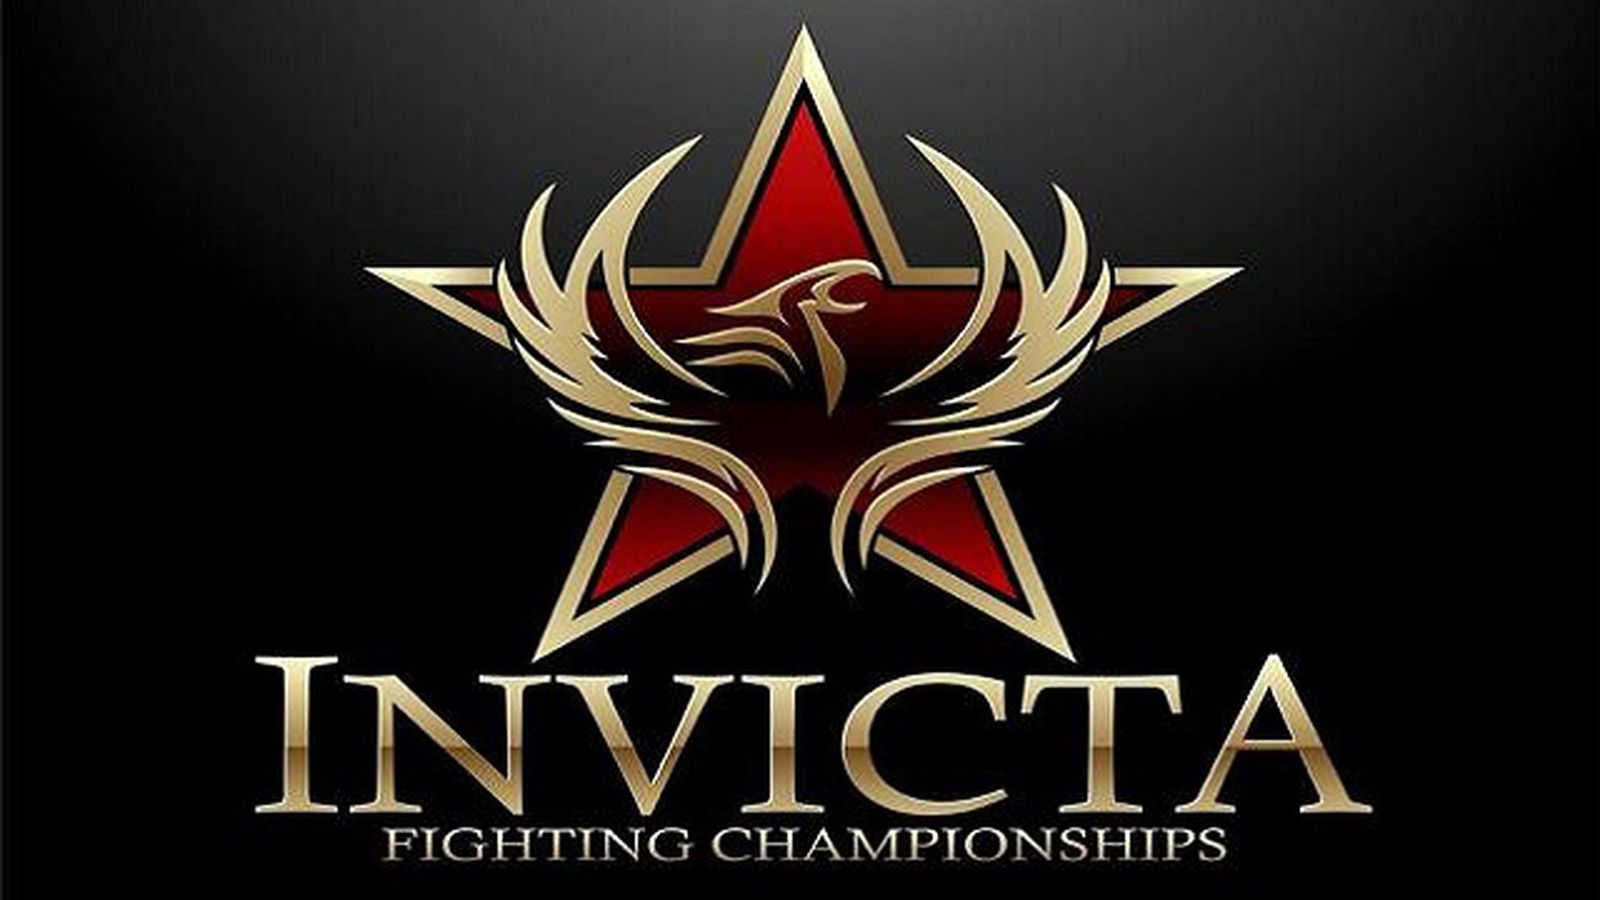 Invicta Fighting Championship